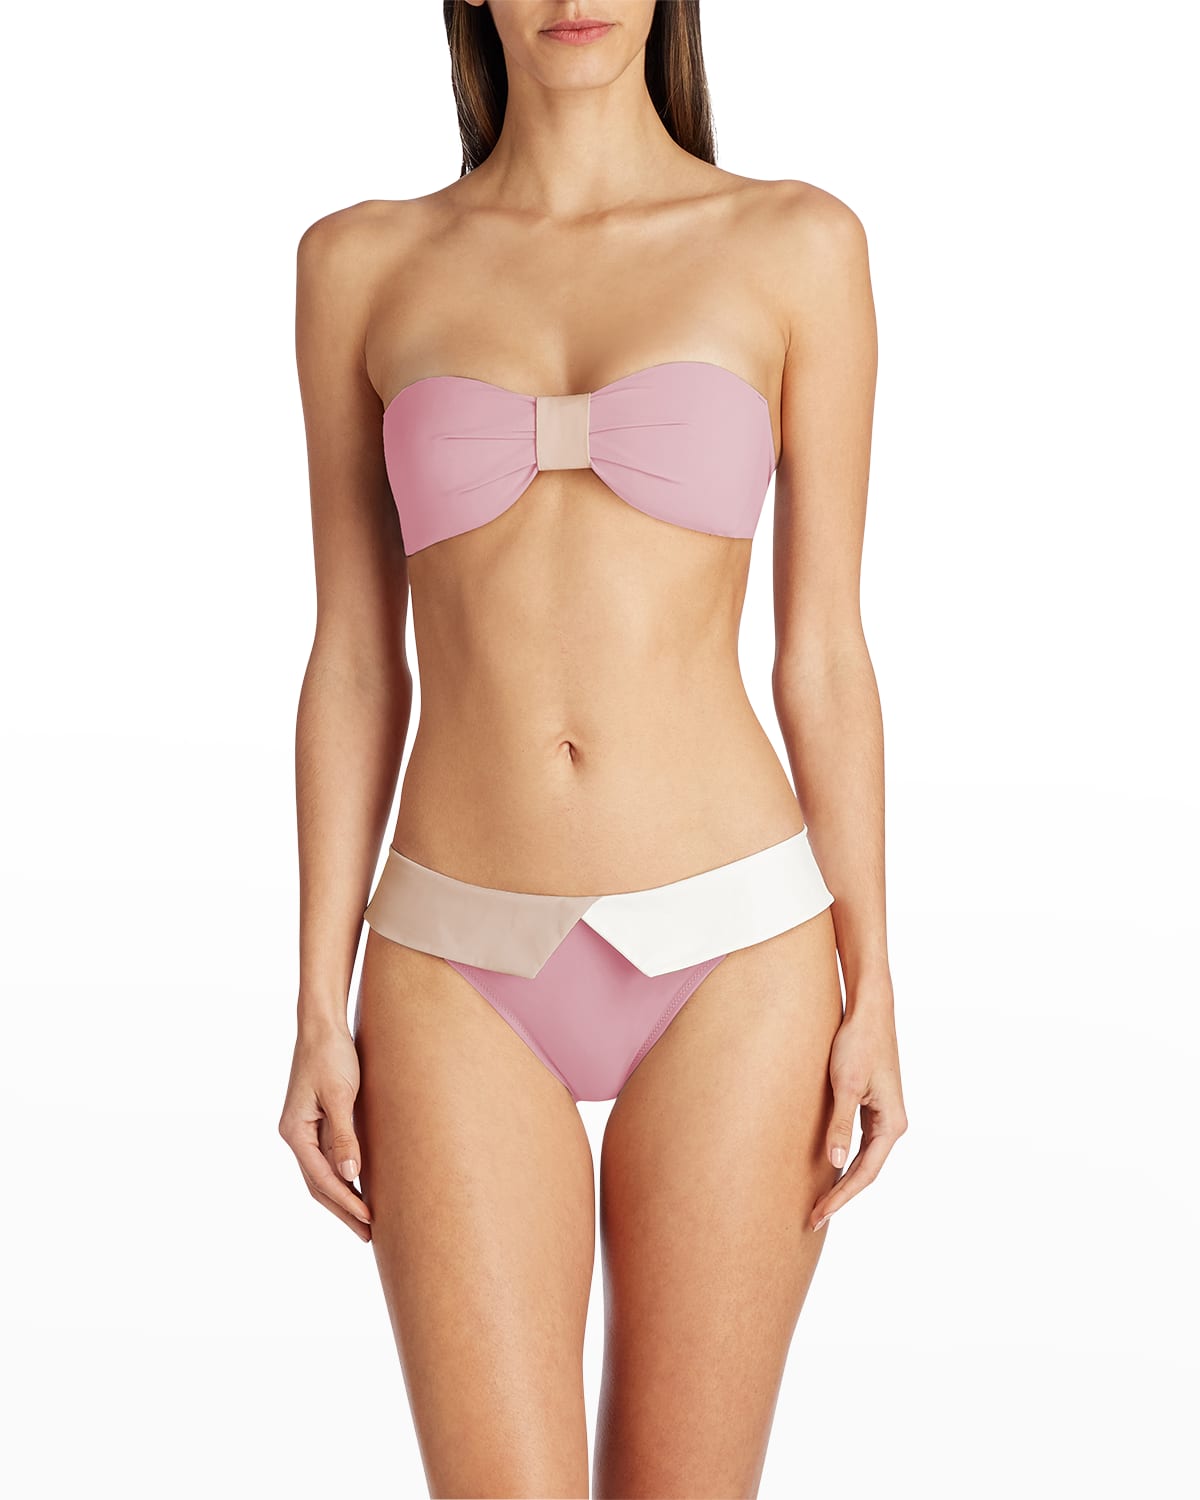 Capri, Scrunch Bikini Swimwear Bottom, Full Coverage Bikini Bottom